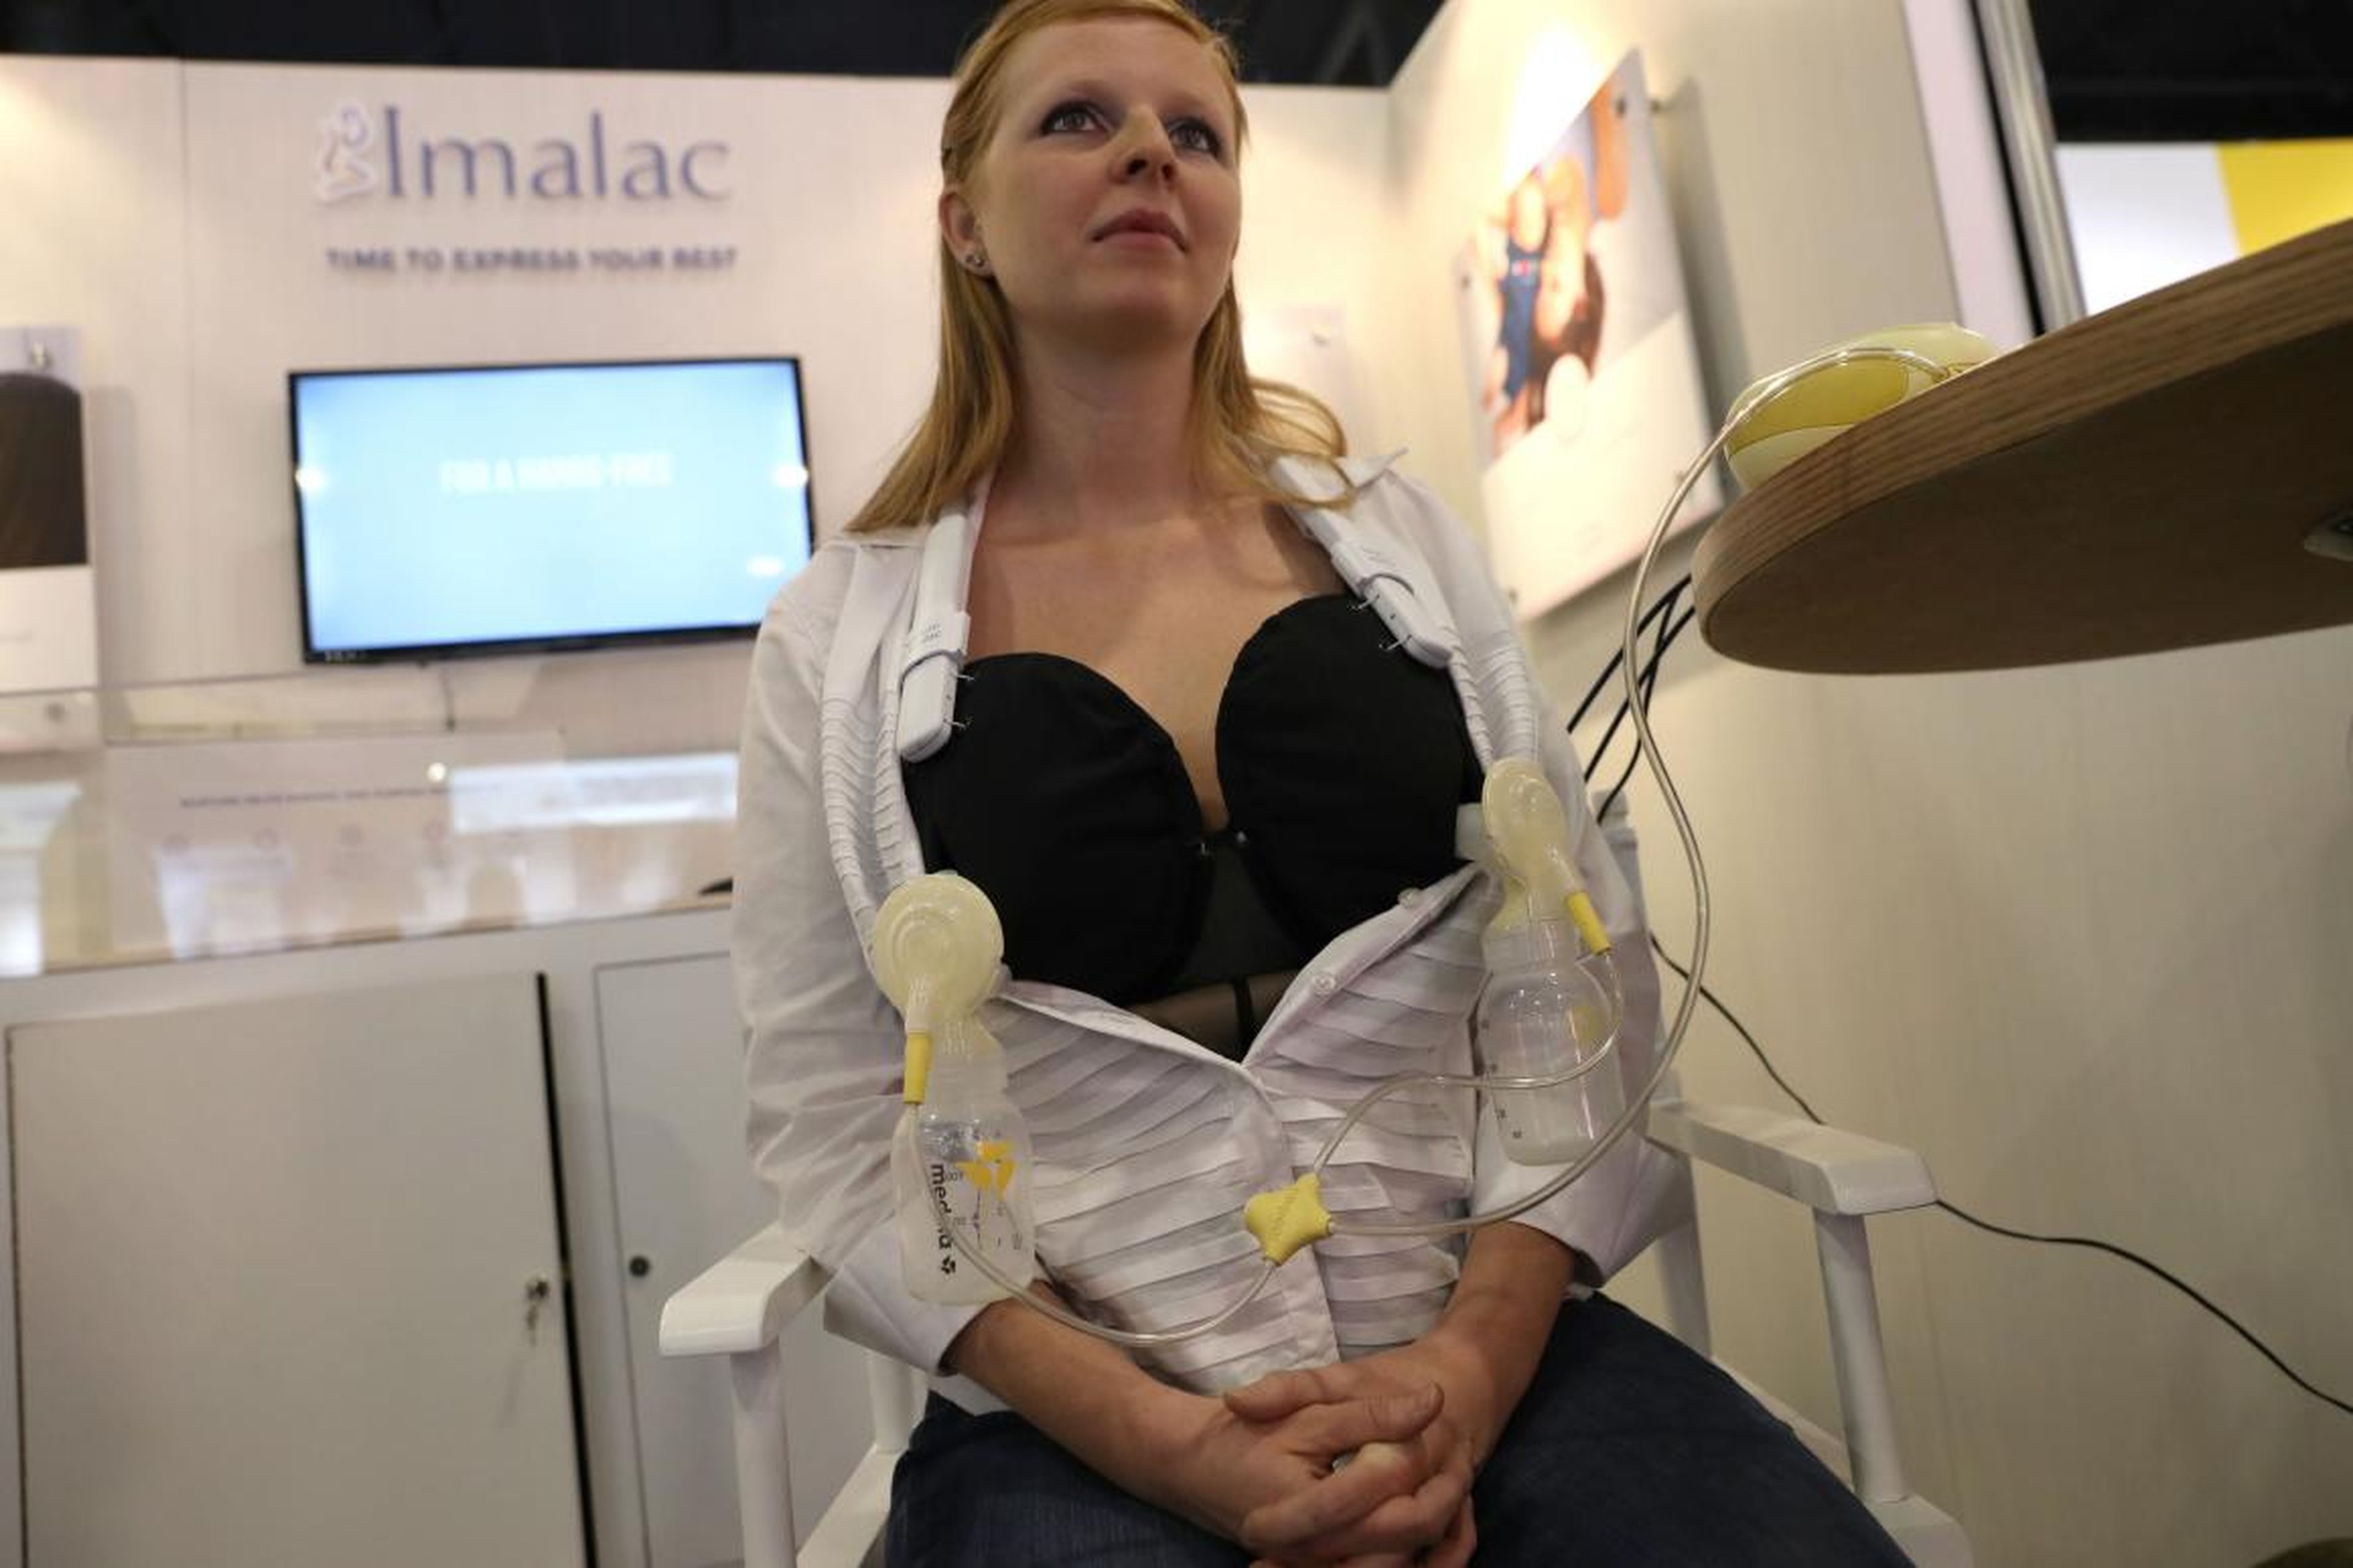 The Imalac nurture nursing and pumping bra has attachable massage cups.